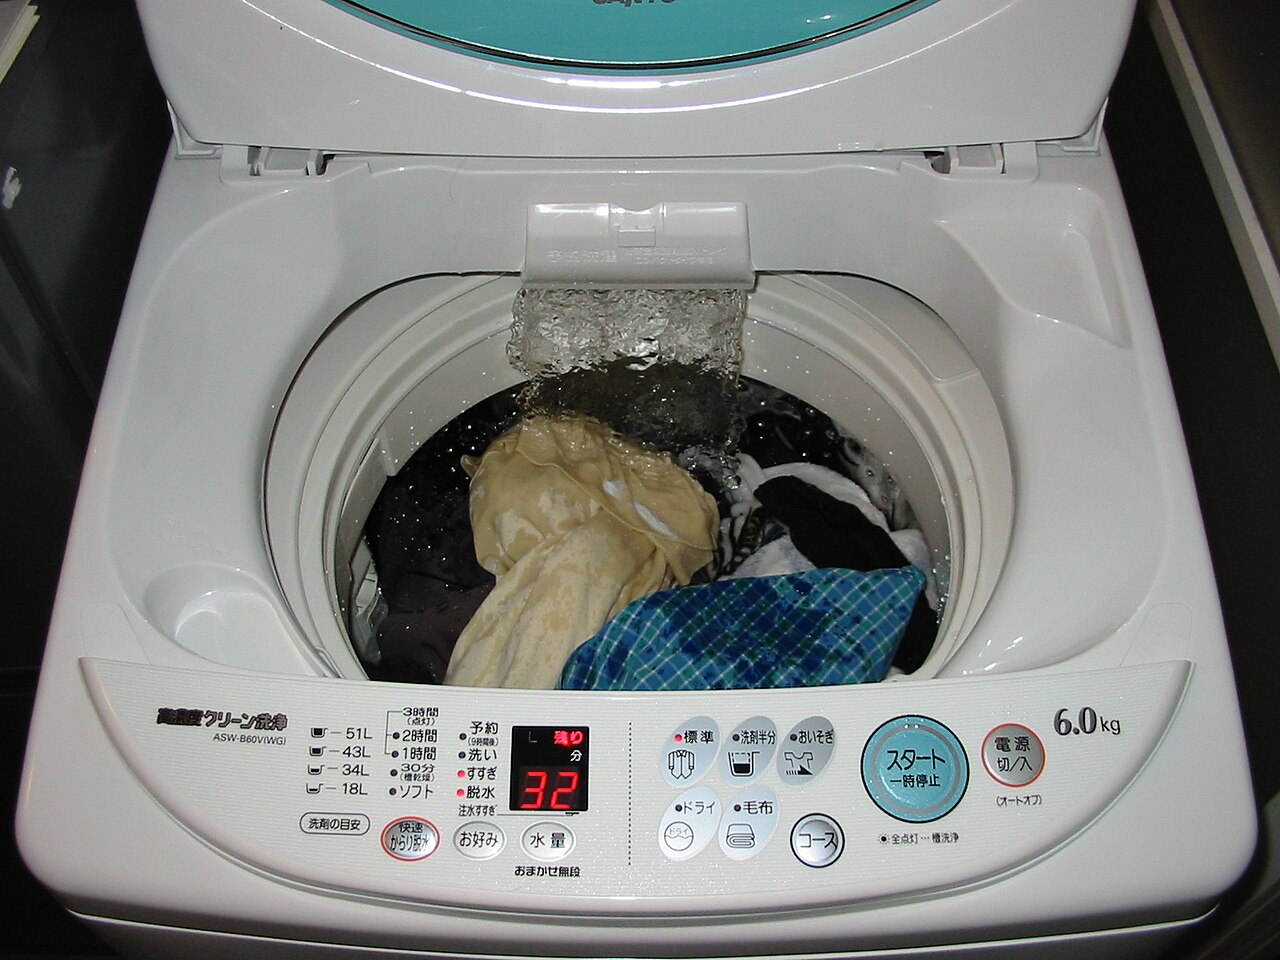 File:Water entered a washing machine, Sanyo ASW-B60V(WG) 20060514 